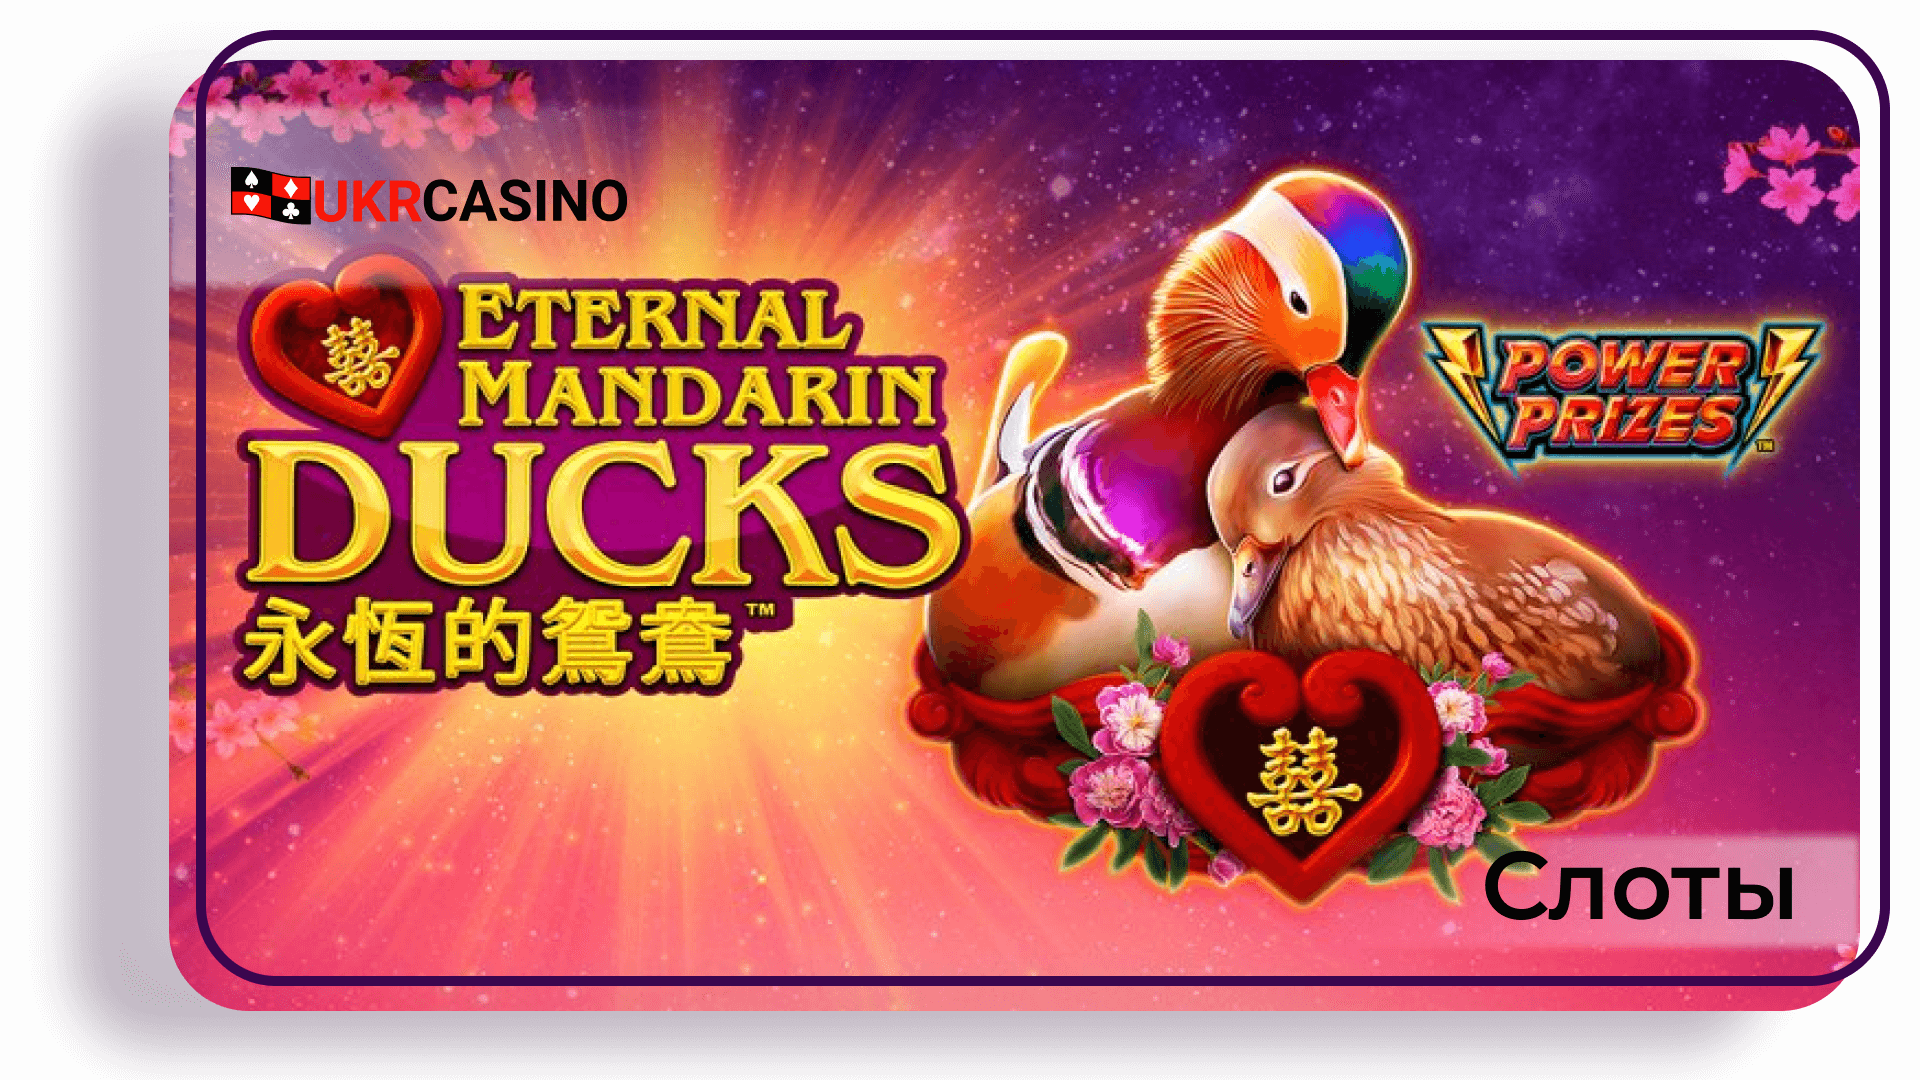 Power Prizes - Eternal Mandarin Ducks - Greentube